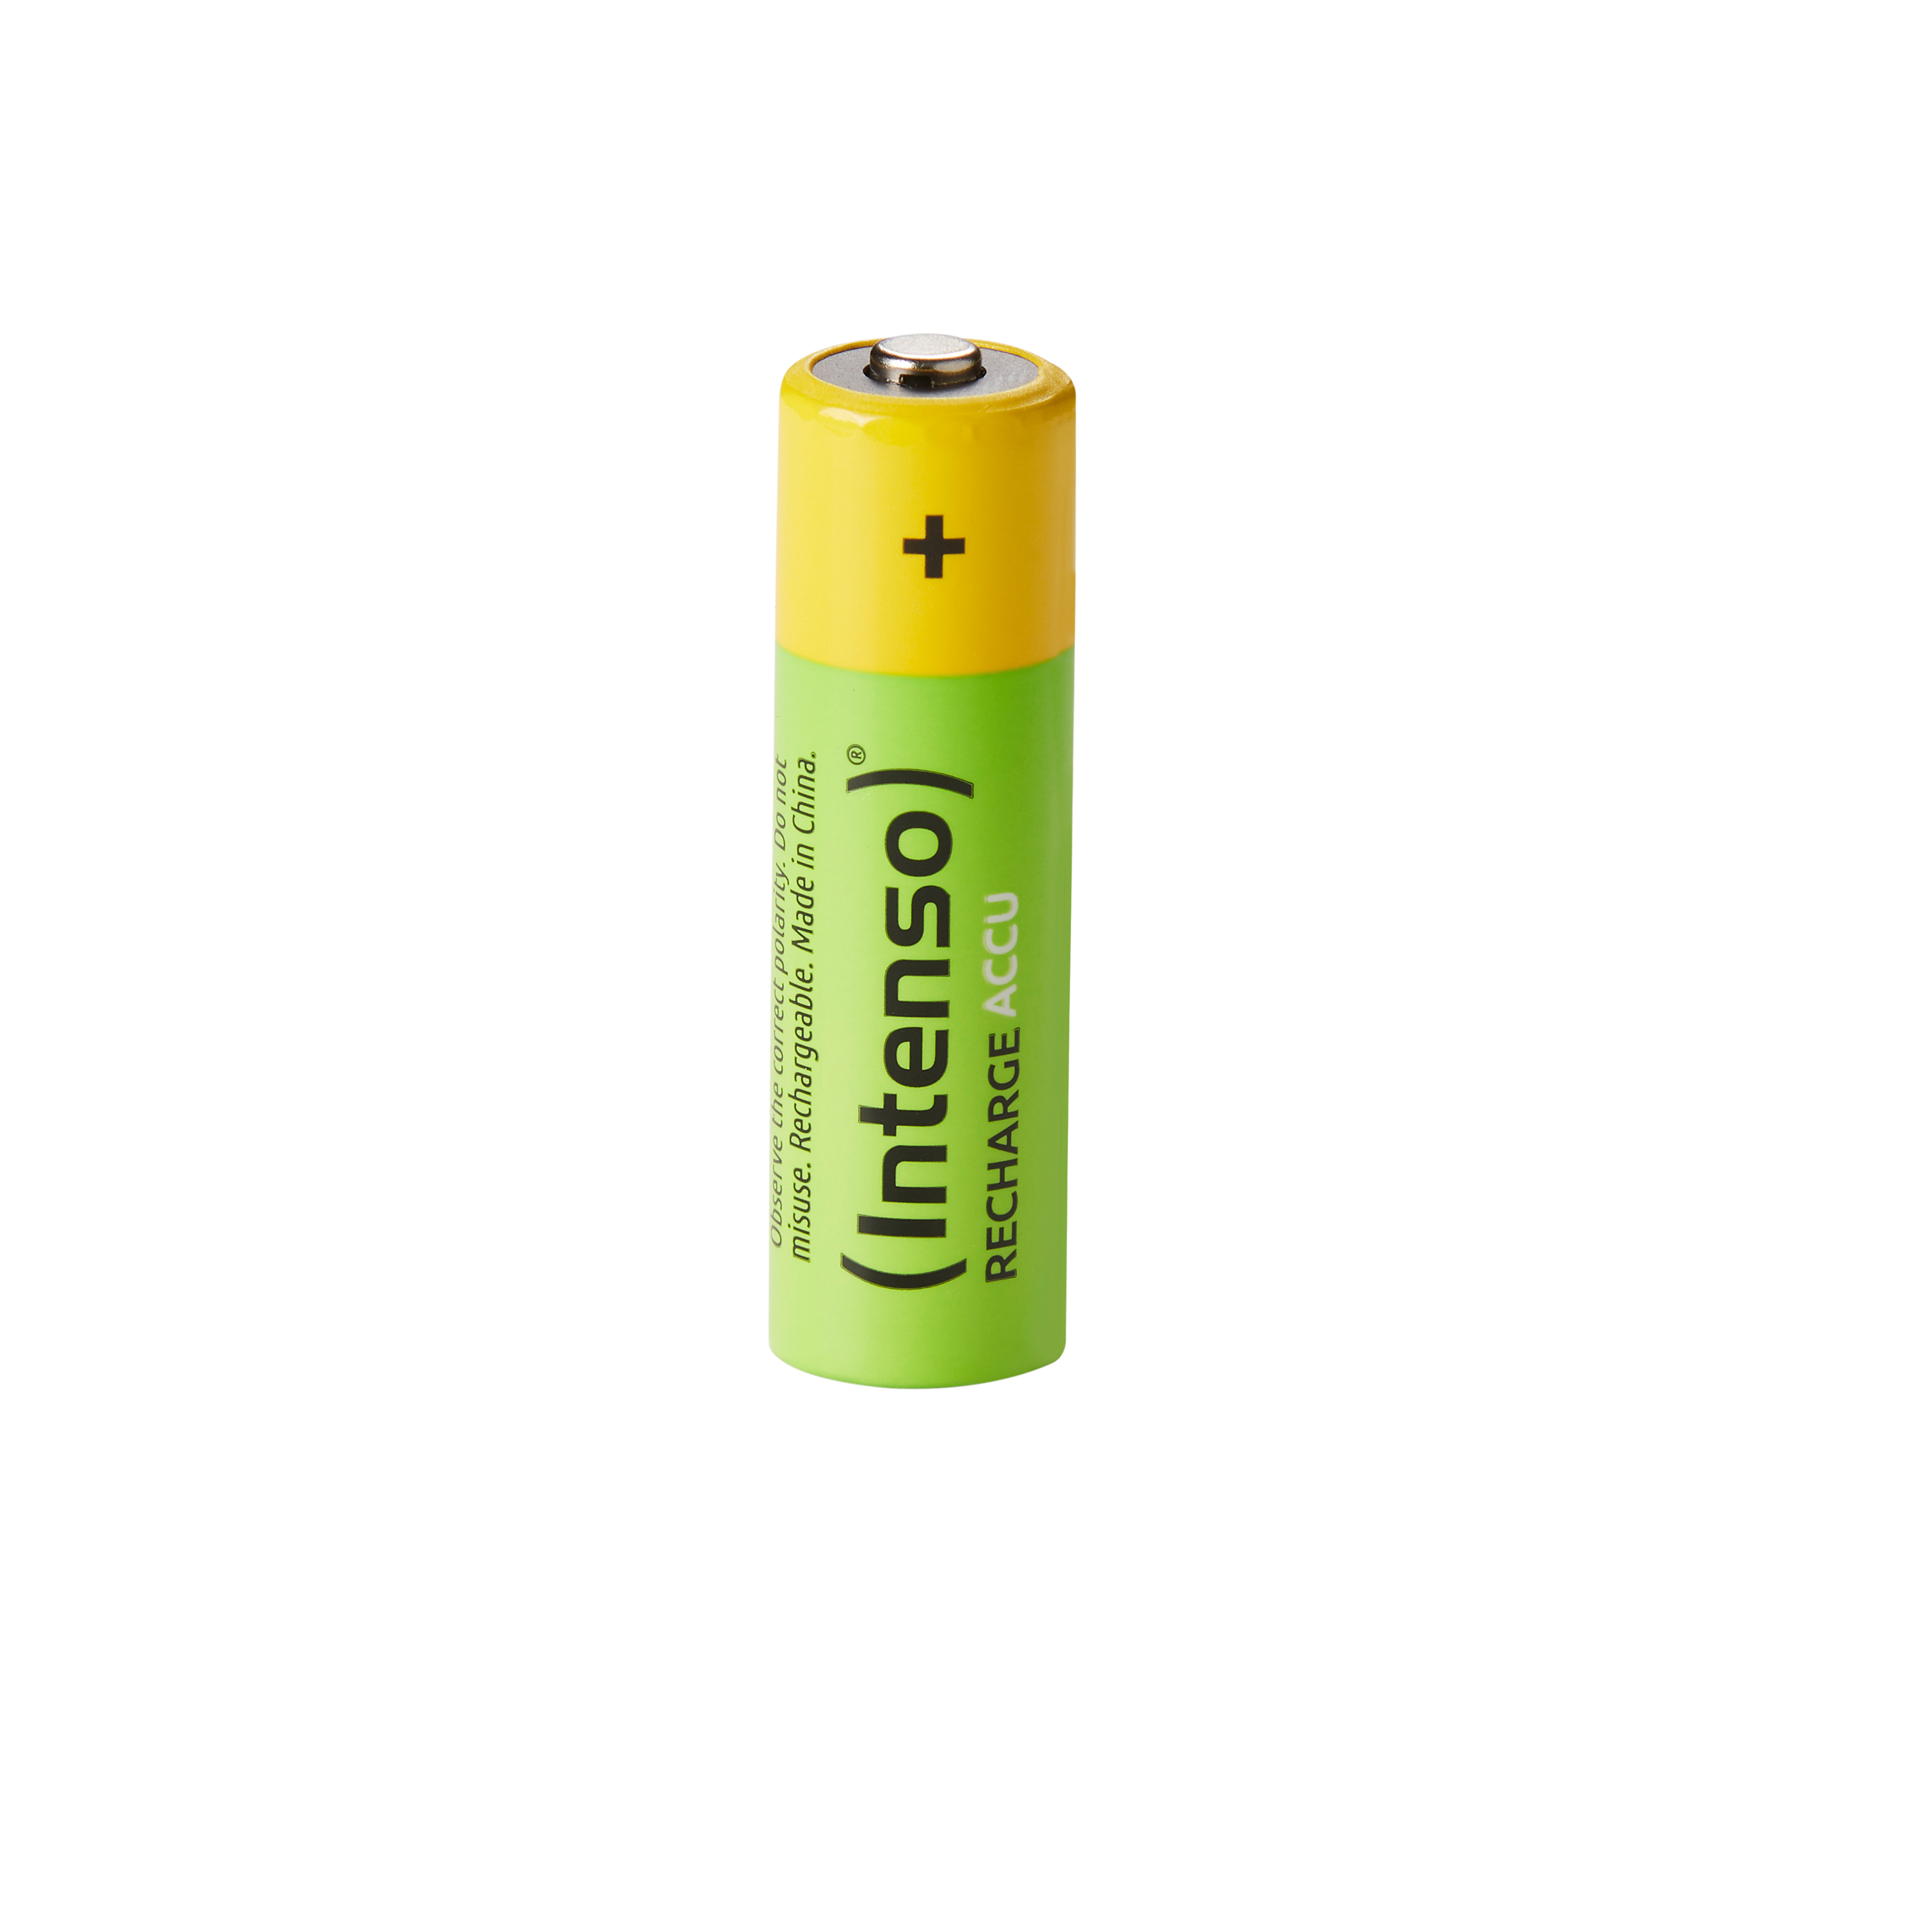 Eco 4er NiMH Energy Mignon, 2700 Wiederaufladbare 2700 Accu INTENSO HR6 Batterie, (Nickel-Metallhydrid) HR6, AA Pack mAh AA, mAh Batterie